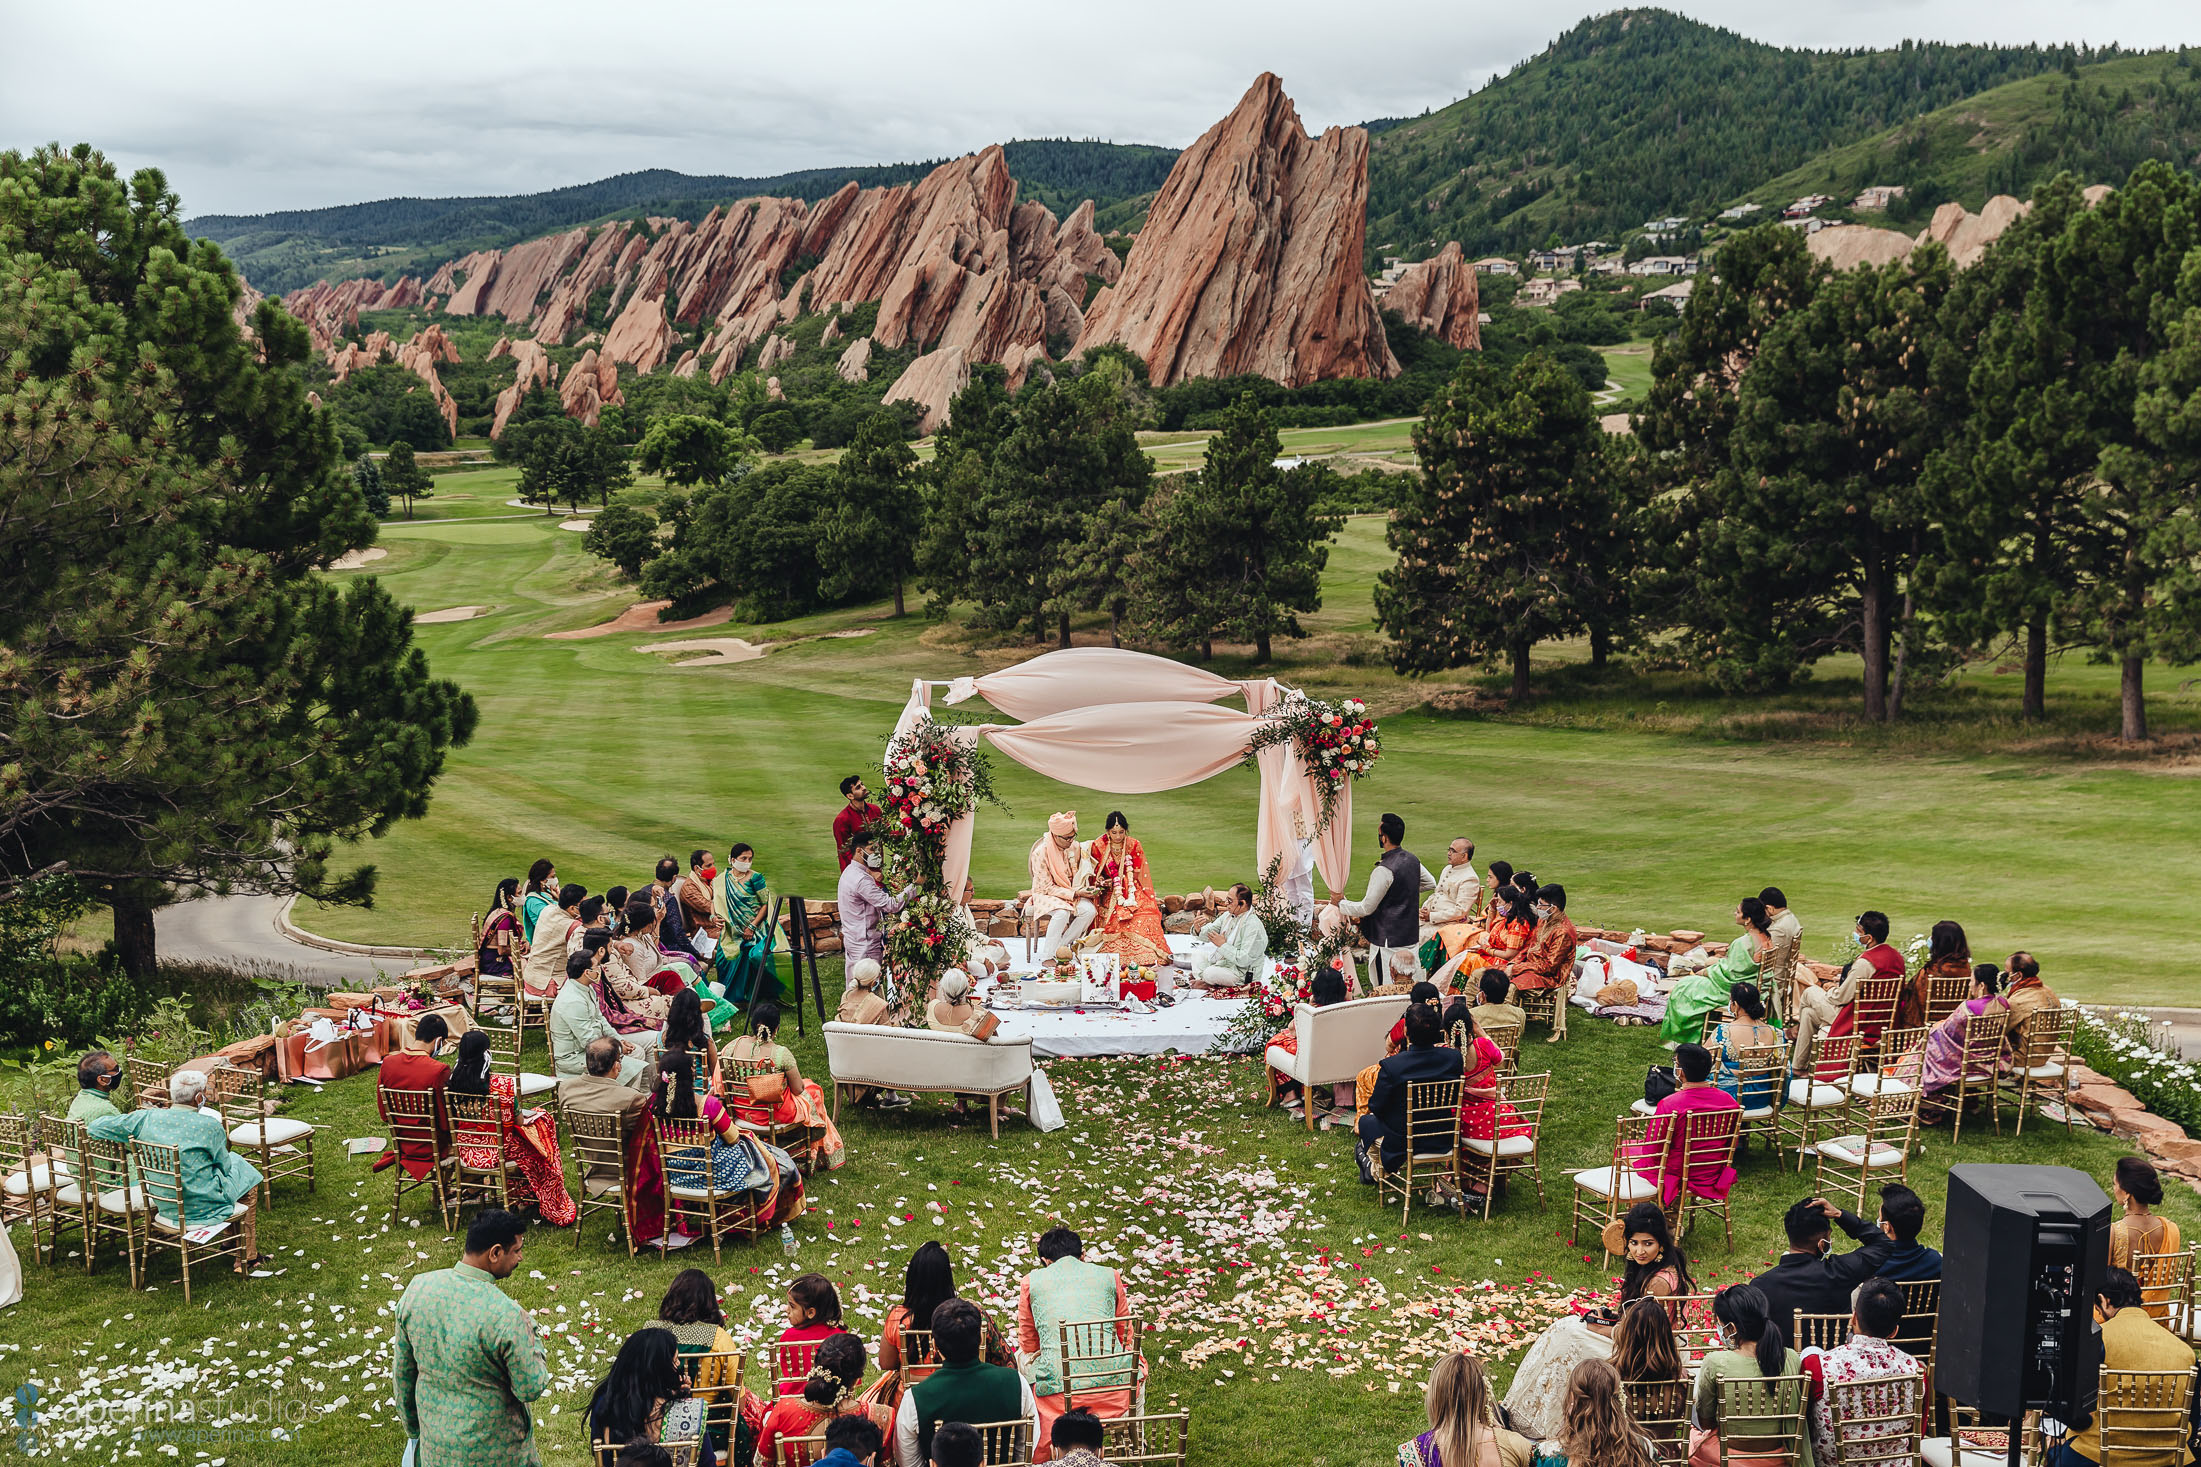 Destination Indian wedding photographer - Hindu Wedding in Denver, CO at the Arrowhead Golf Course